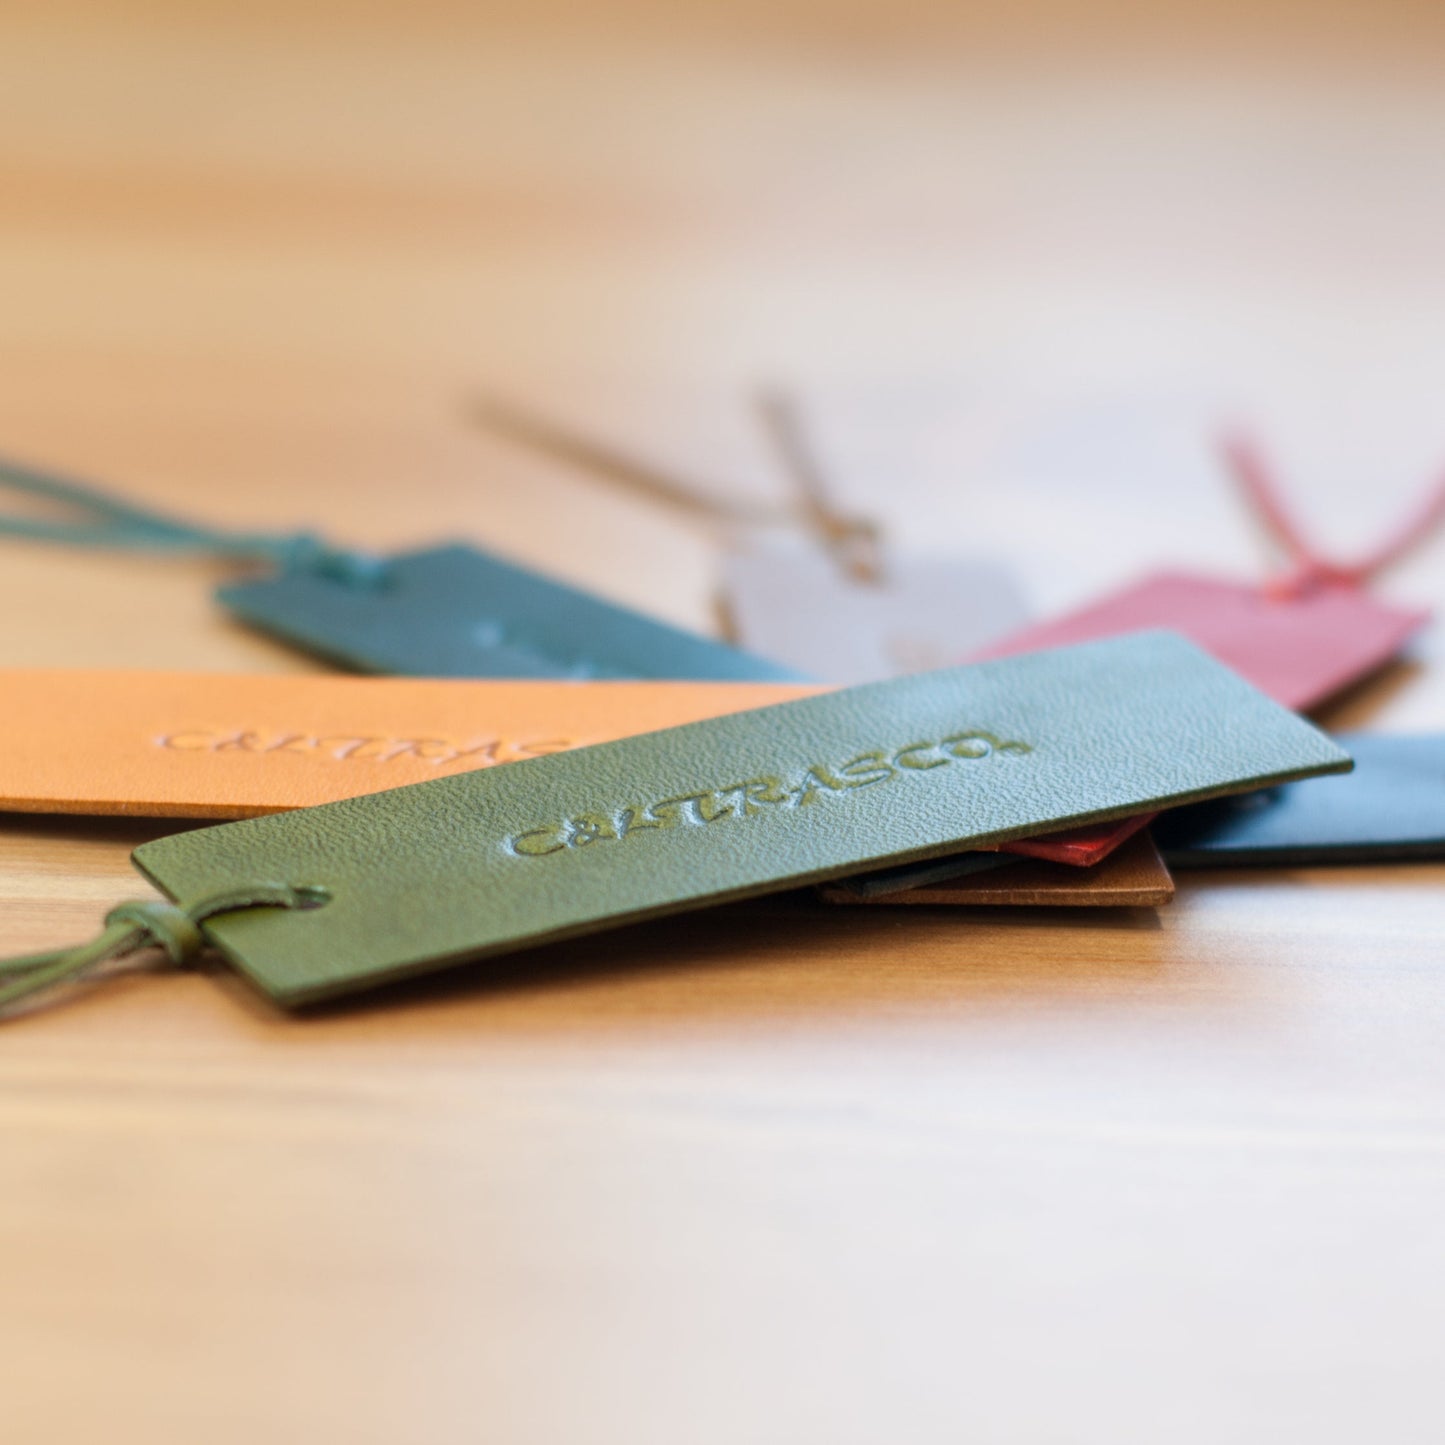 ≪Classic Series≫ “Name engraving” bookmark genuine leather (Tochigi leather)